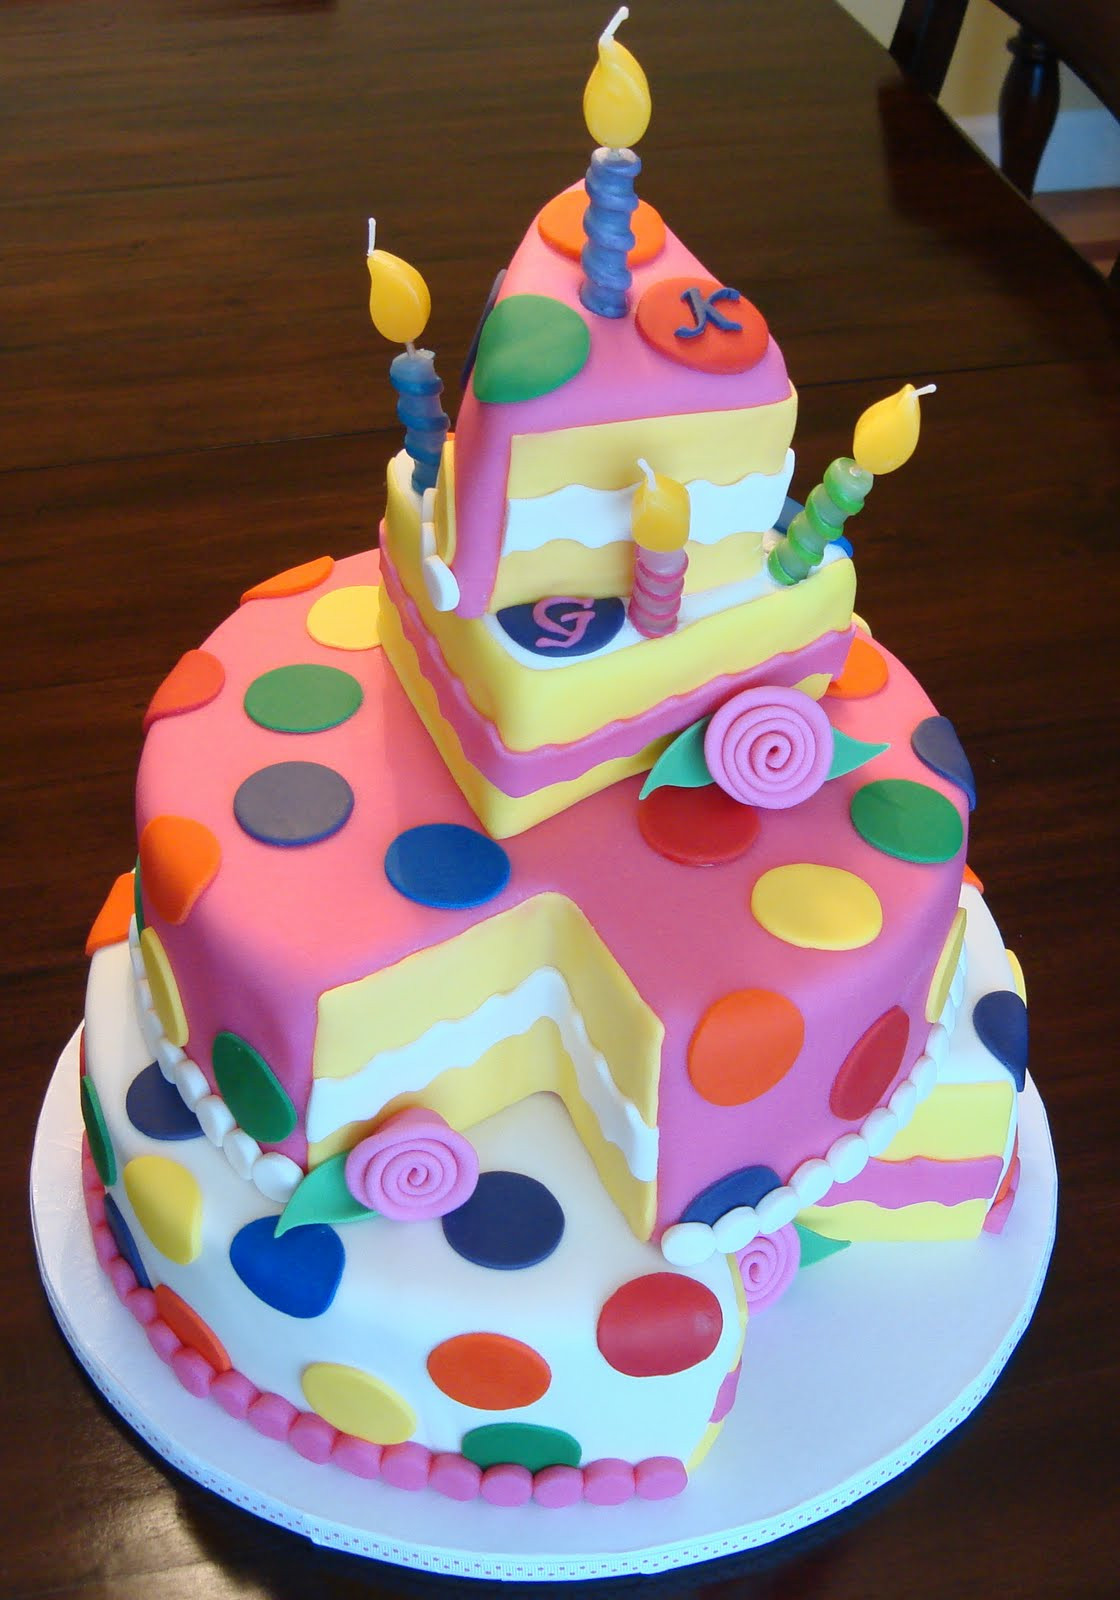 Free Birthday Cake Pictures
 Debby s Cakes Topsy Turvy Polka Dot Birthday "Cake"